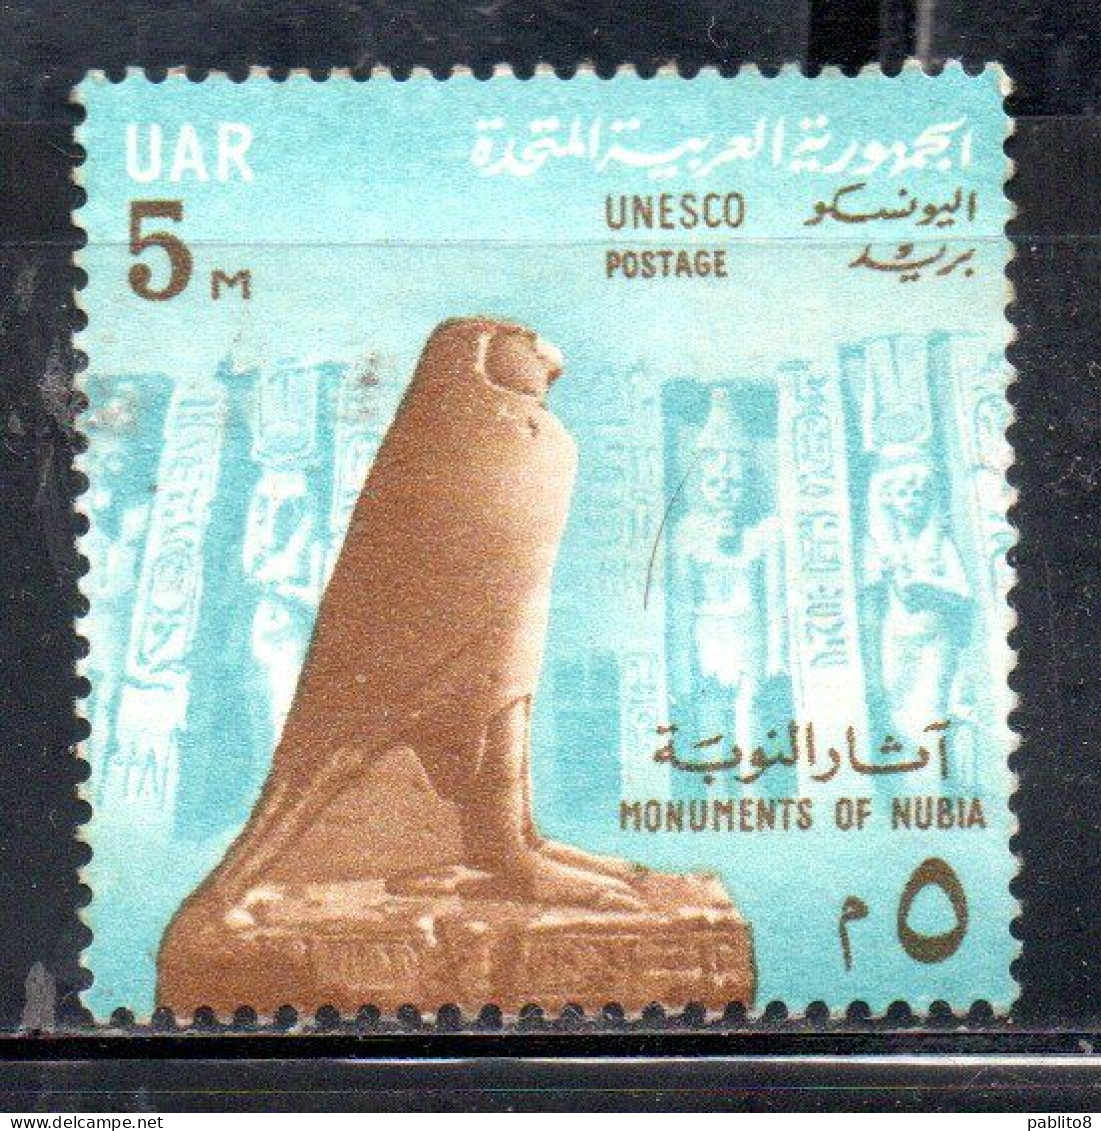 UAR EGYPT EGITTO 1964 SAVE THE MONUMENTS OF NUBIA CAMPAIGN HORUS AND FACADE OF NEFERTARI TEMPLE ABU SIMBEL 5m MH - Ungebraucht